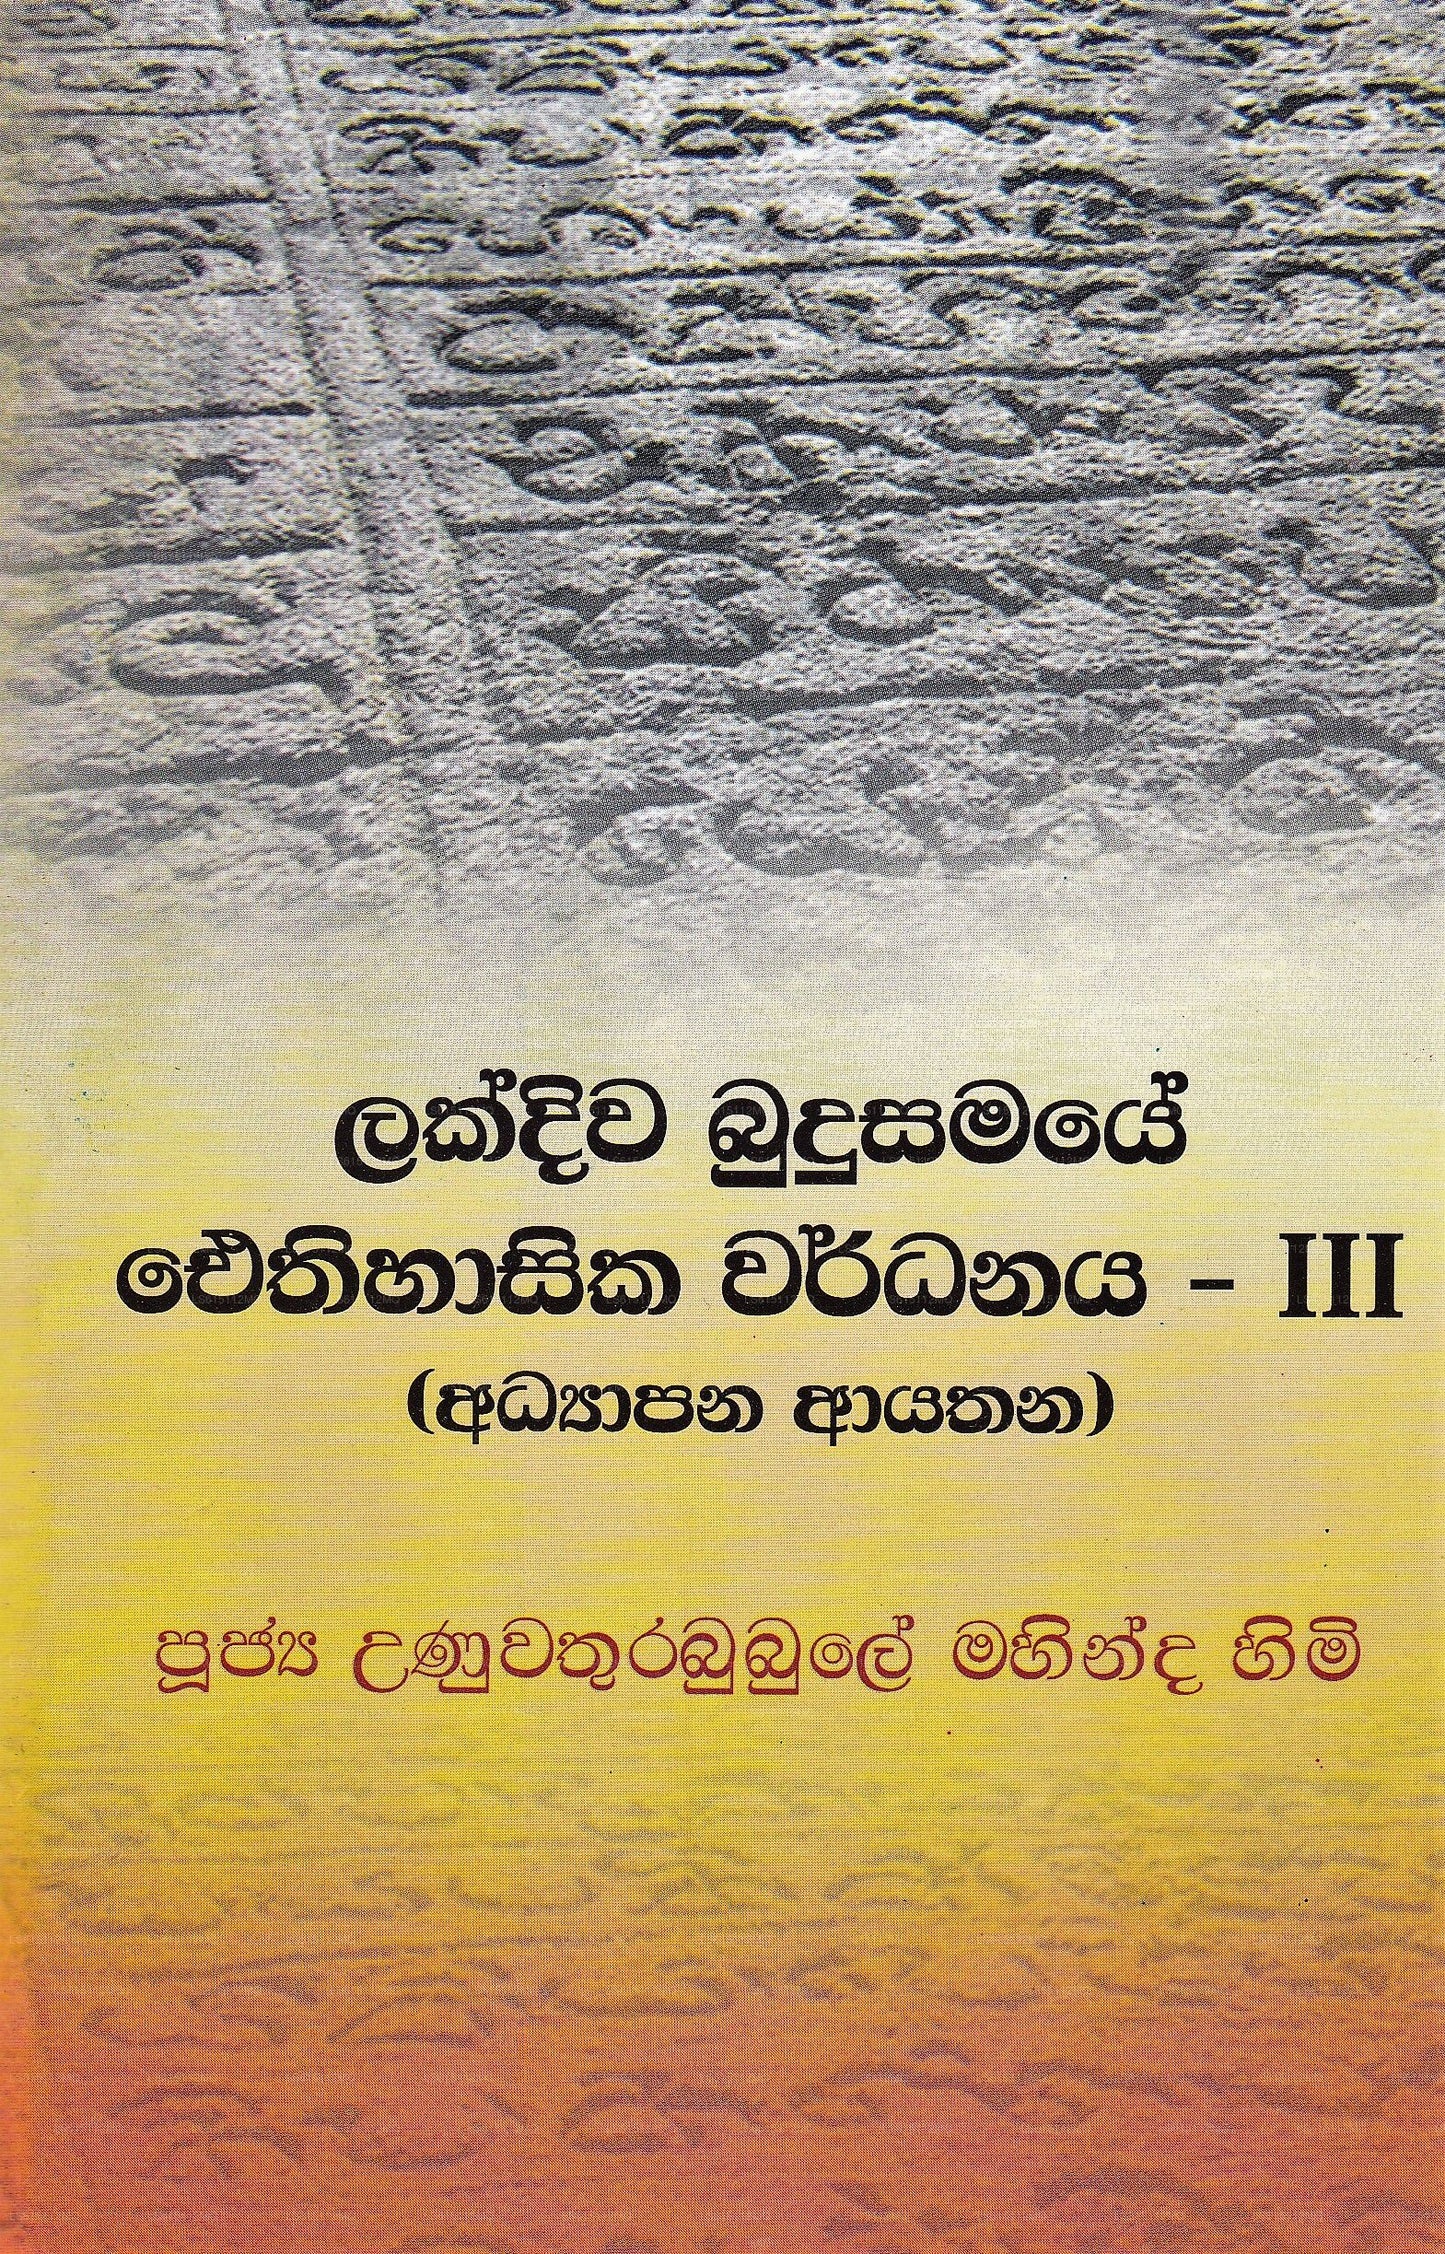 Lakdiwa Budusamaye Aythihasika Wardanaya Iii (Adyapana Ayathana) by Ven ...